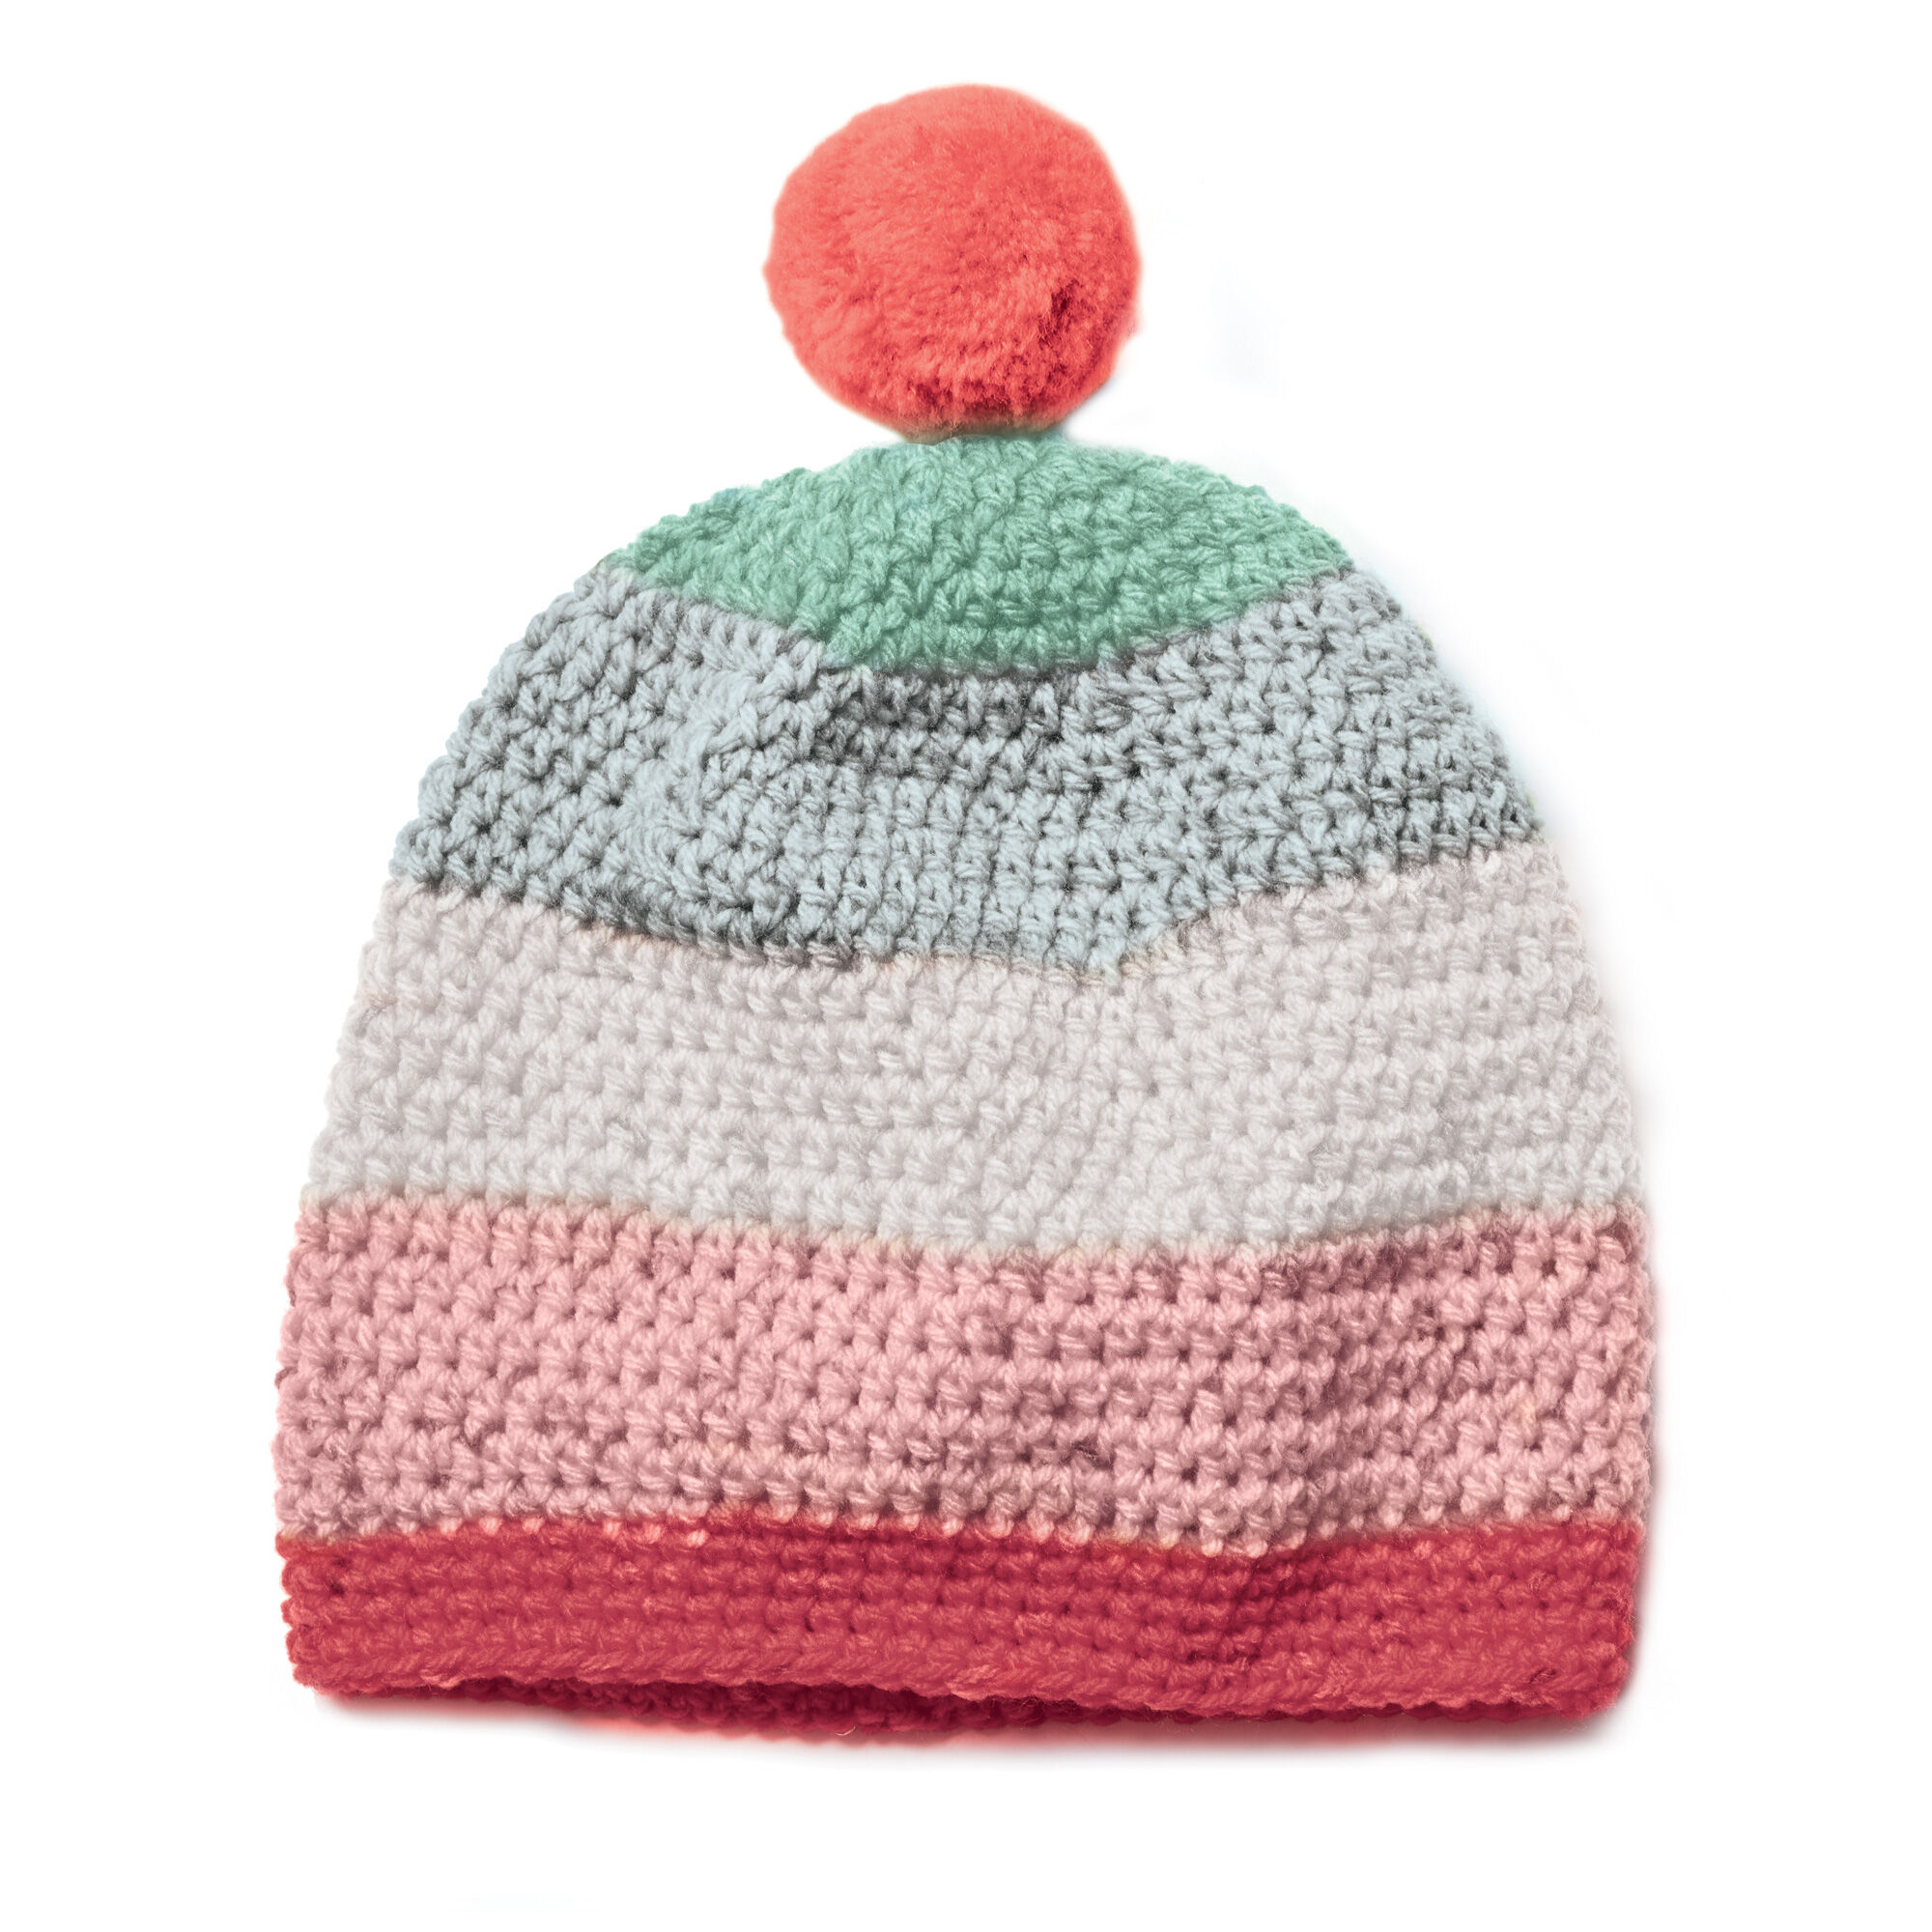 20-crochet-beanie-hat-ideas-for-men-and-women-the-best-of-2019